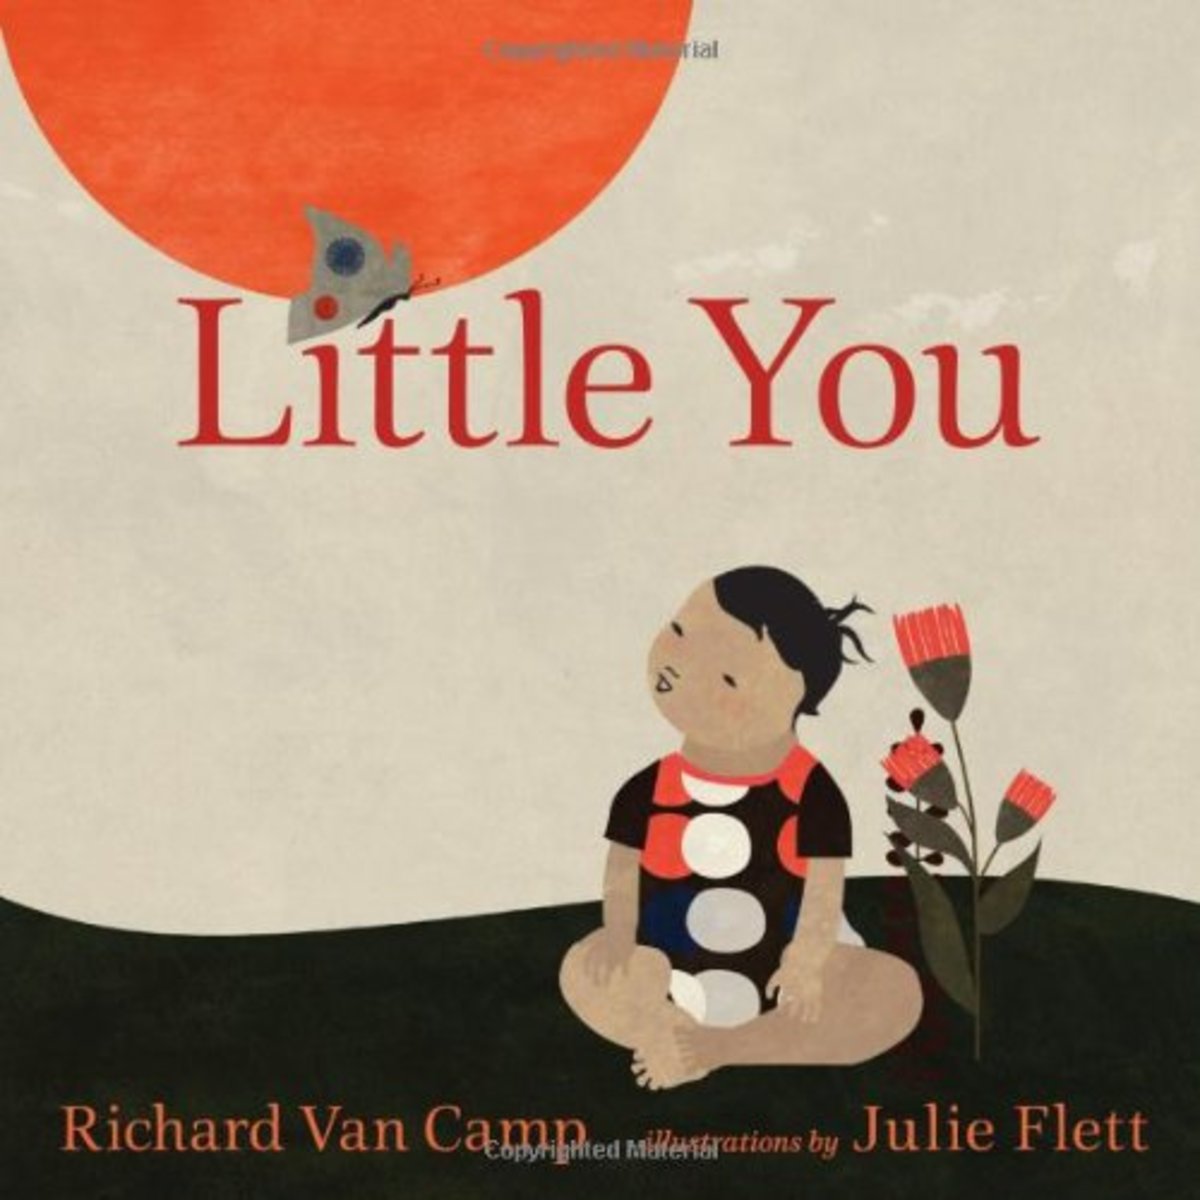 Little You by Richard Van Camp